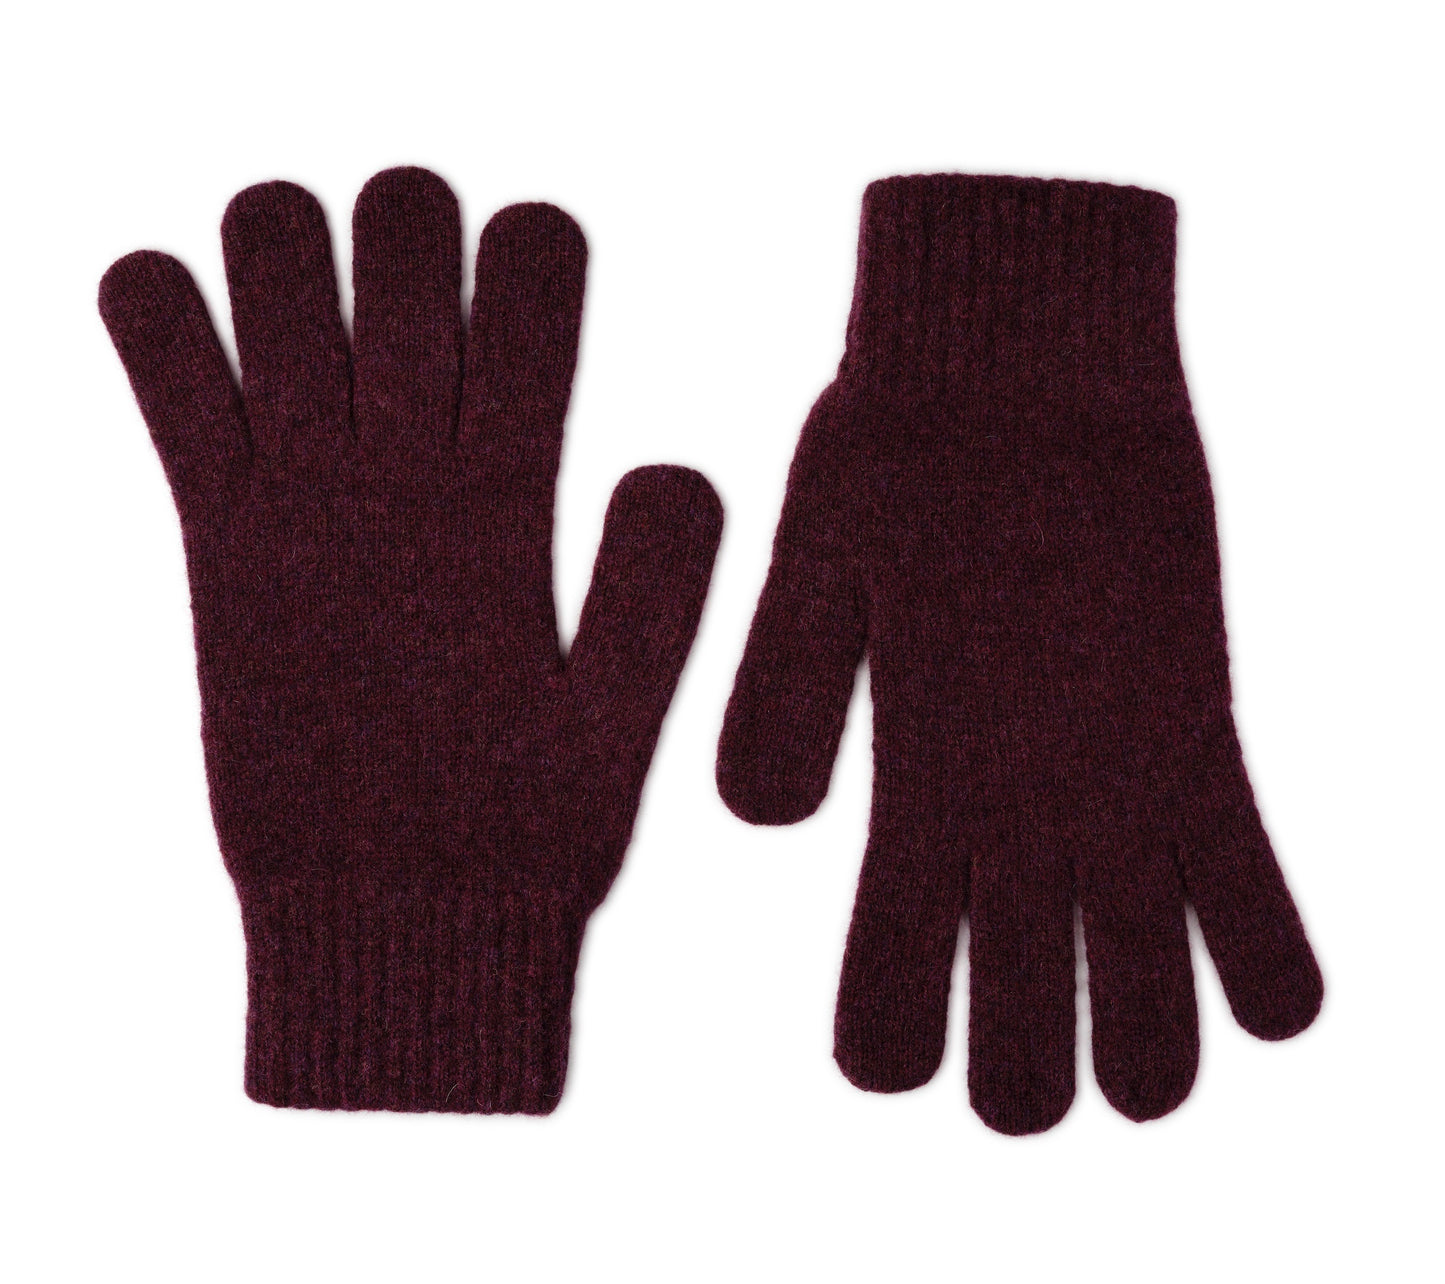 Munro Men's Gloves